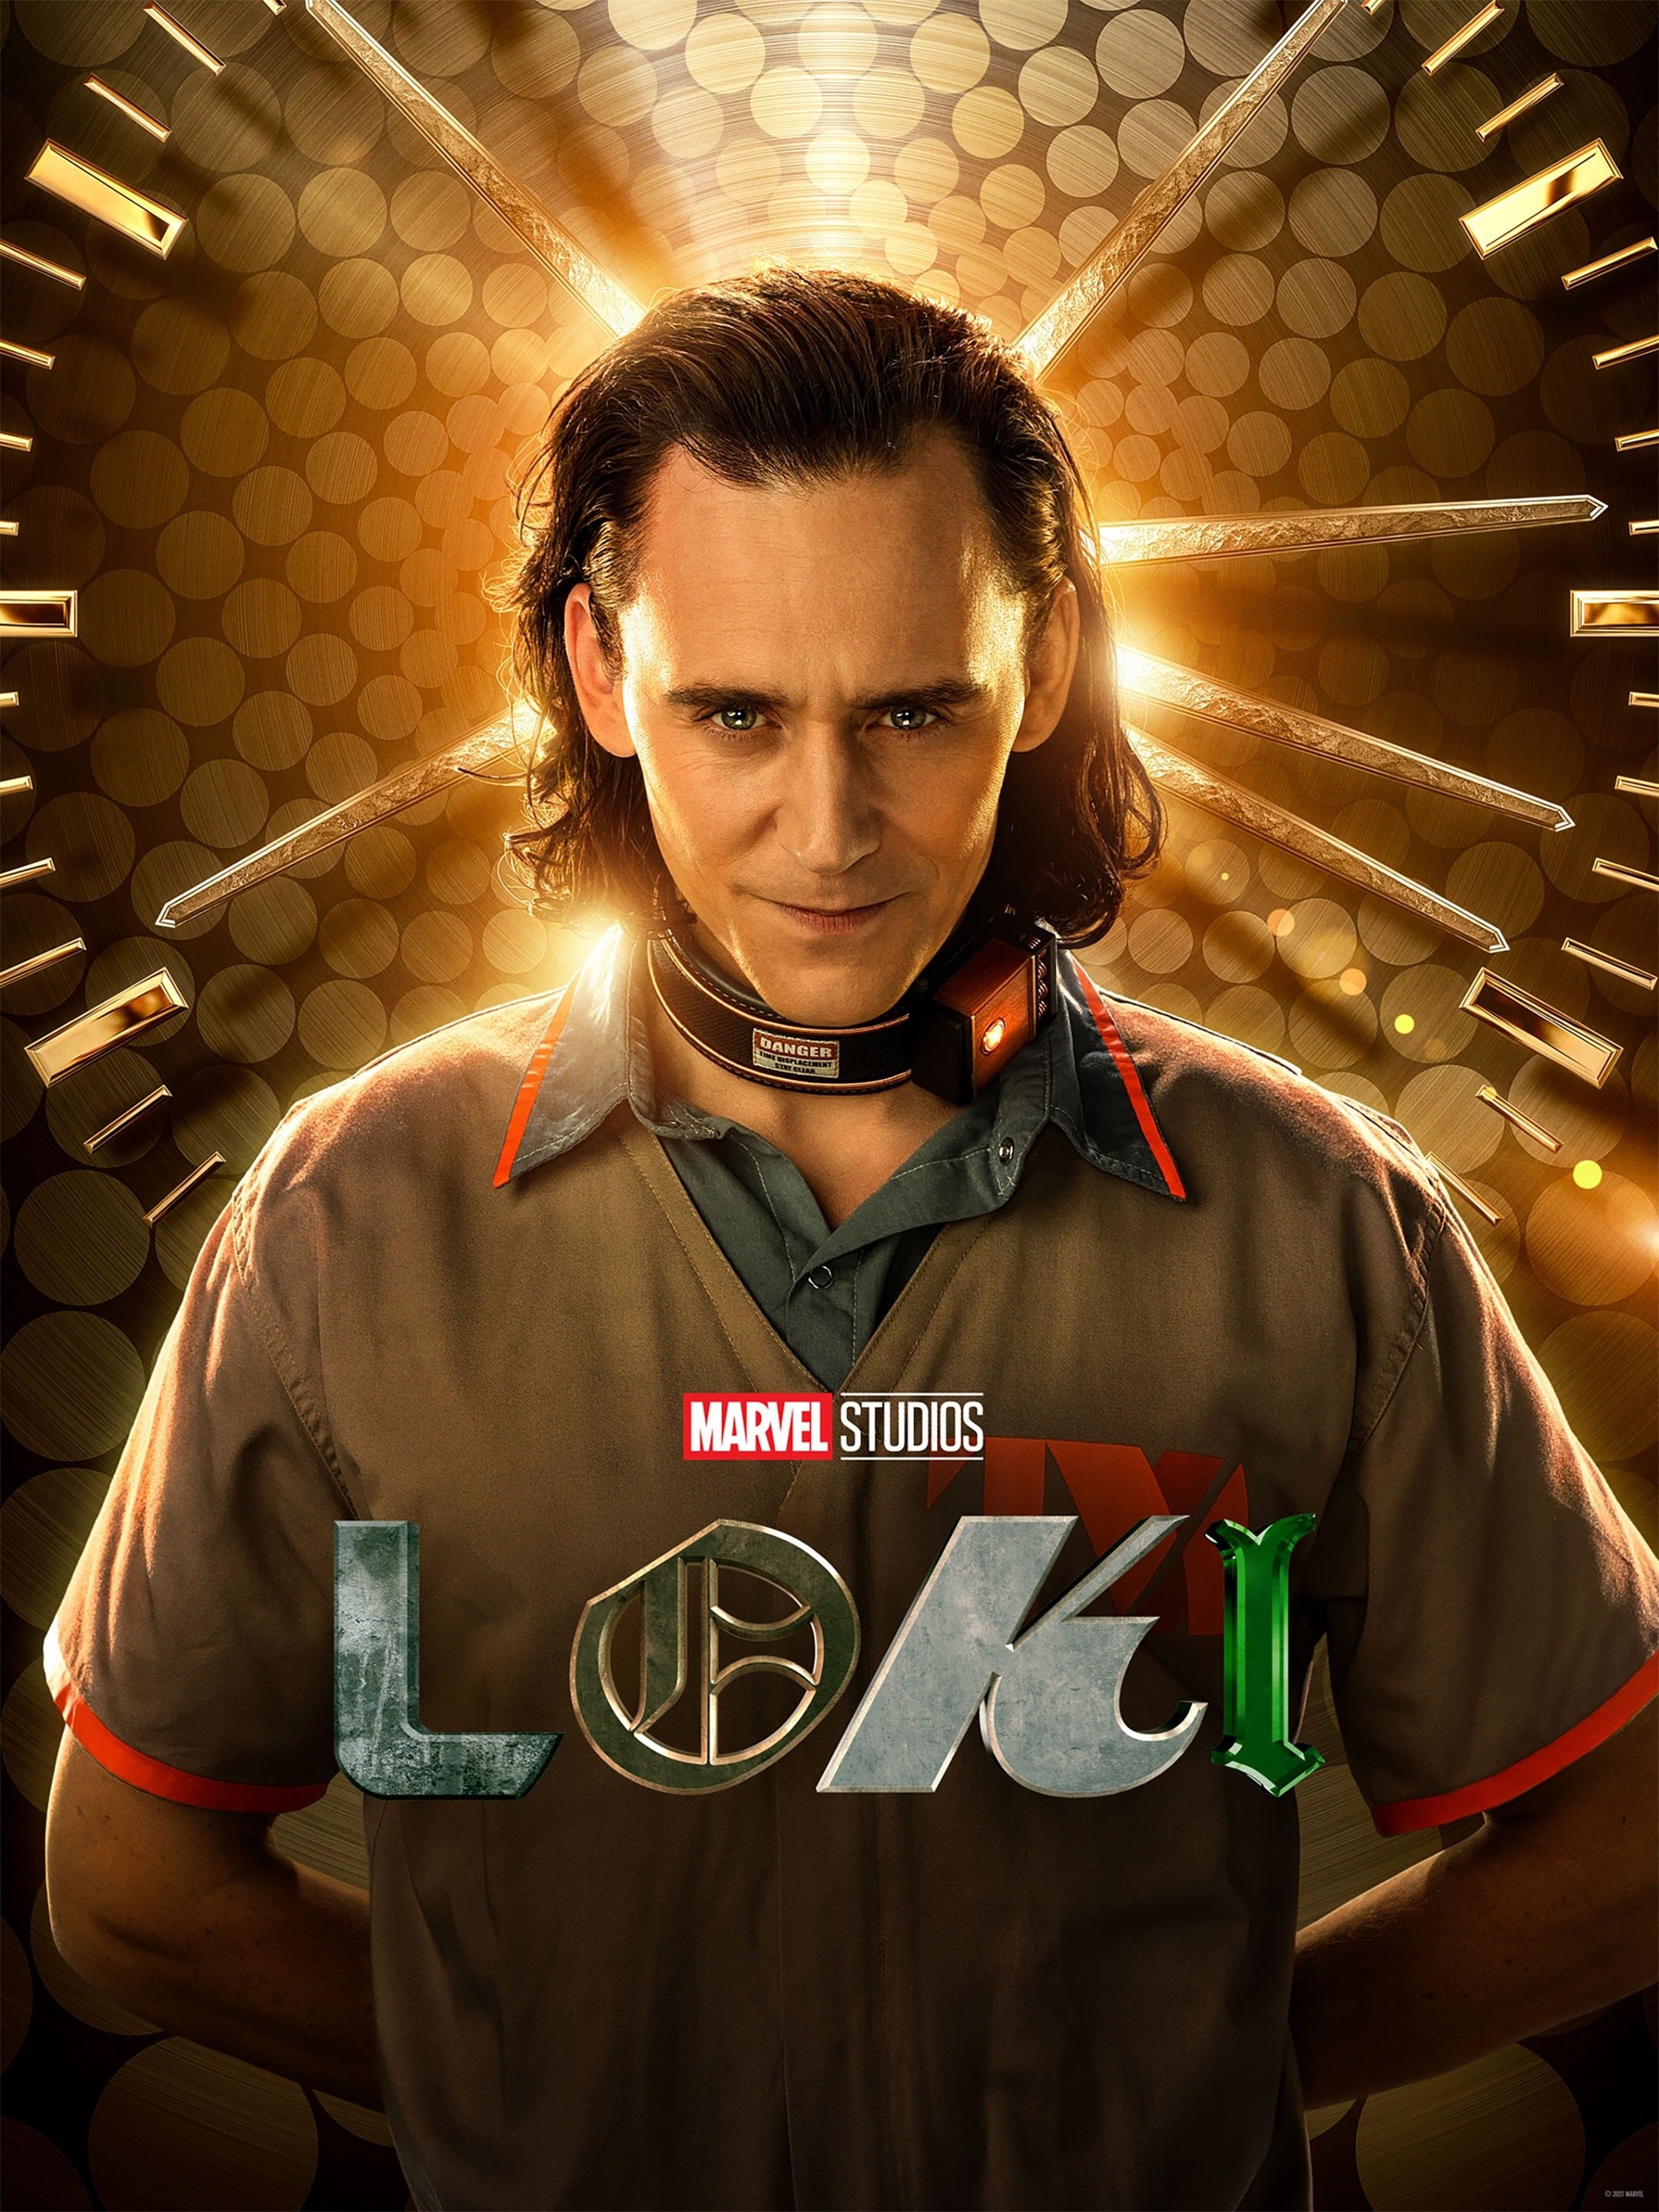 Loki (Season 1)